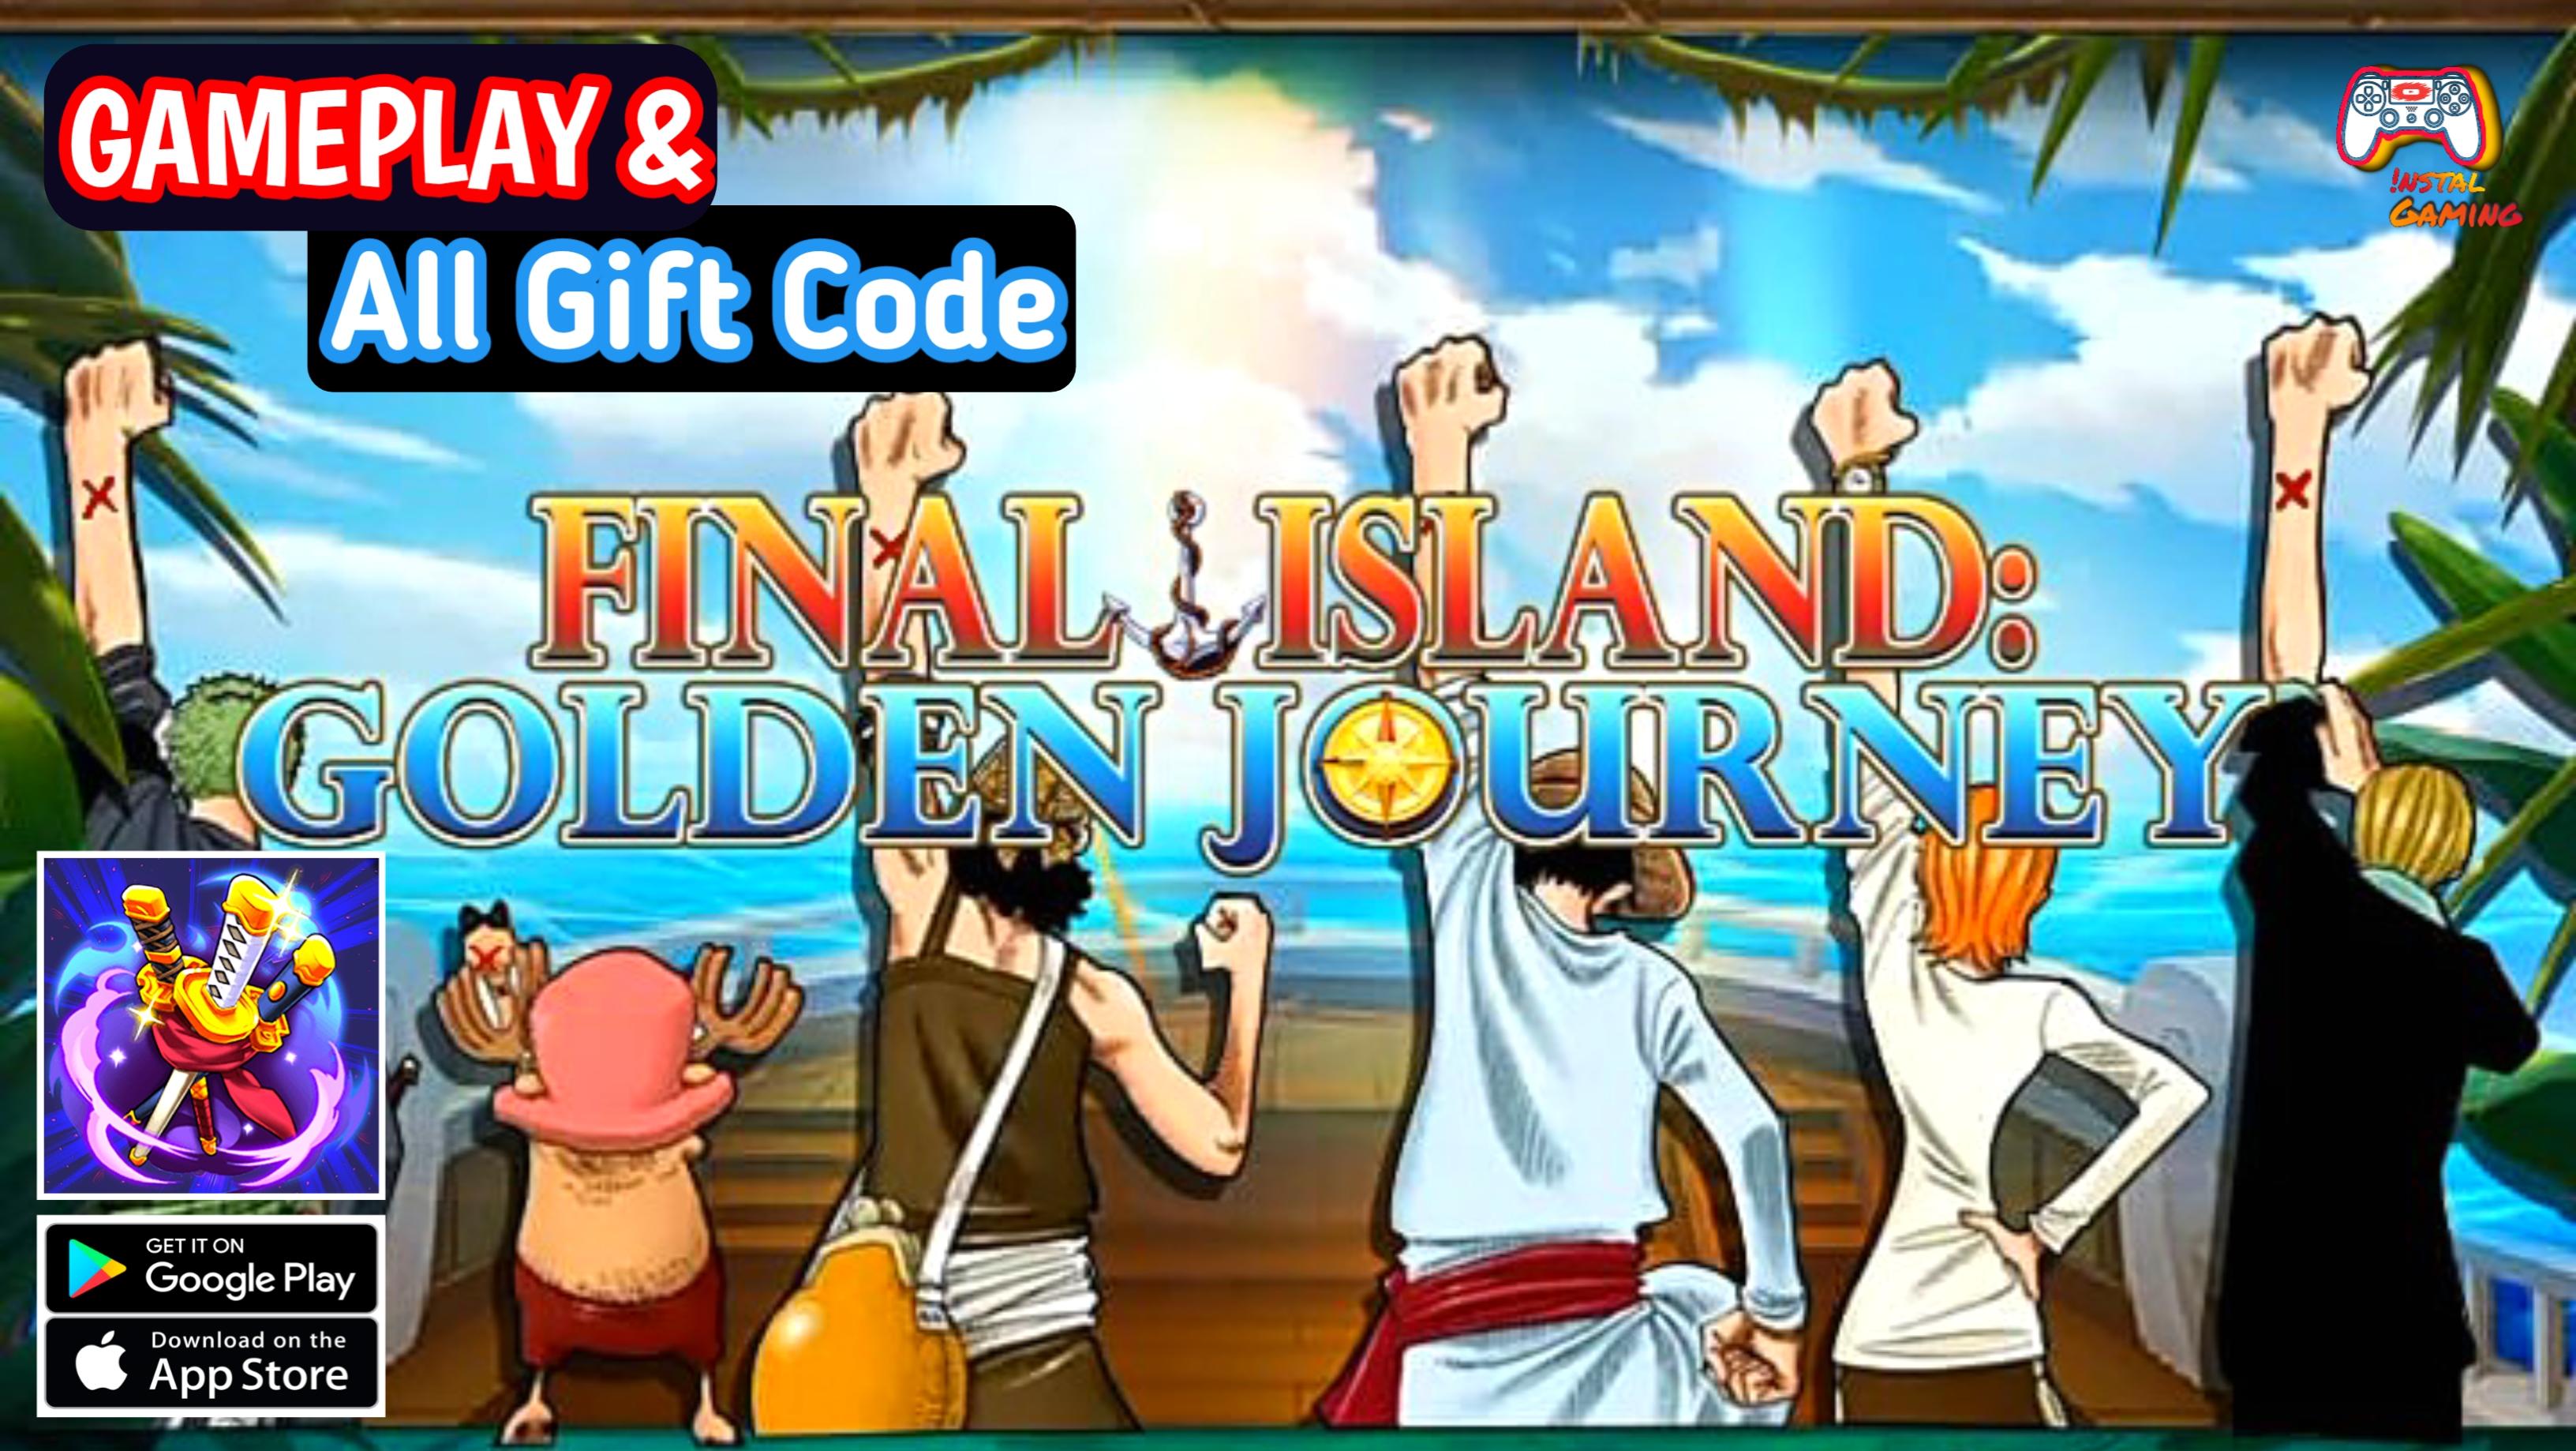 Ocean Journey: Island Warriors (One Piece) Redeem Codes & Gameplay